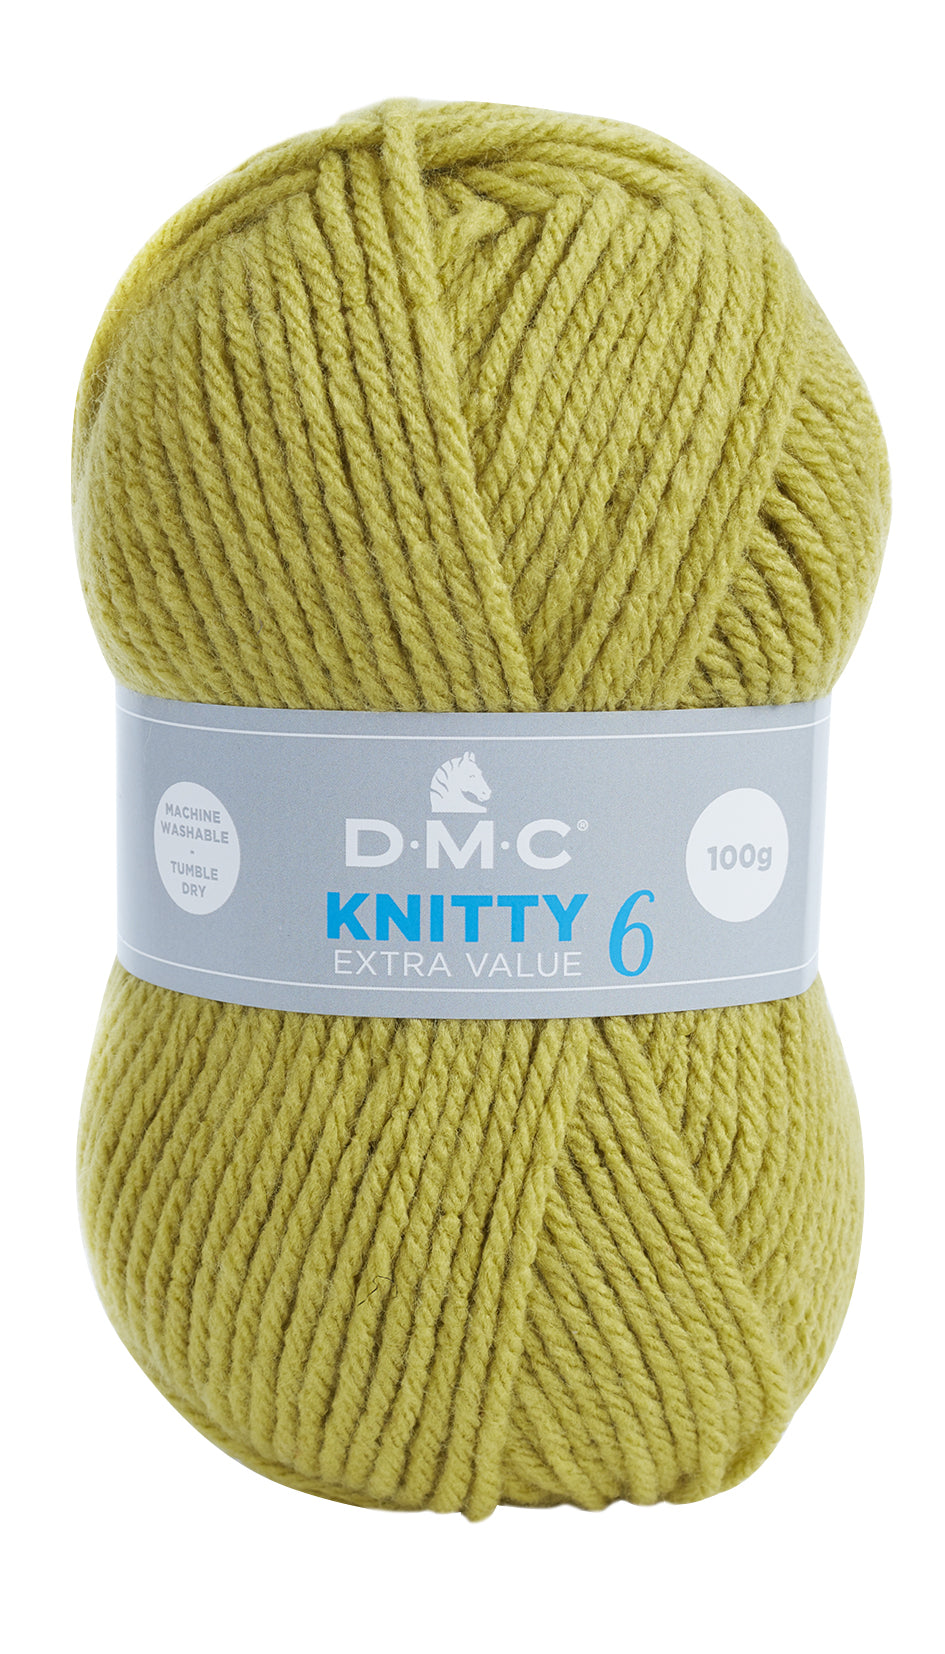 Lana Dmc Knitty 6 Colore 785